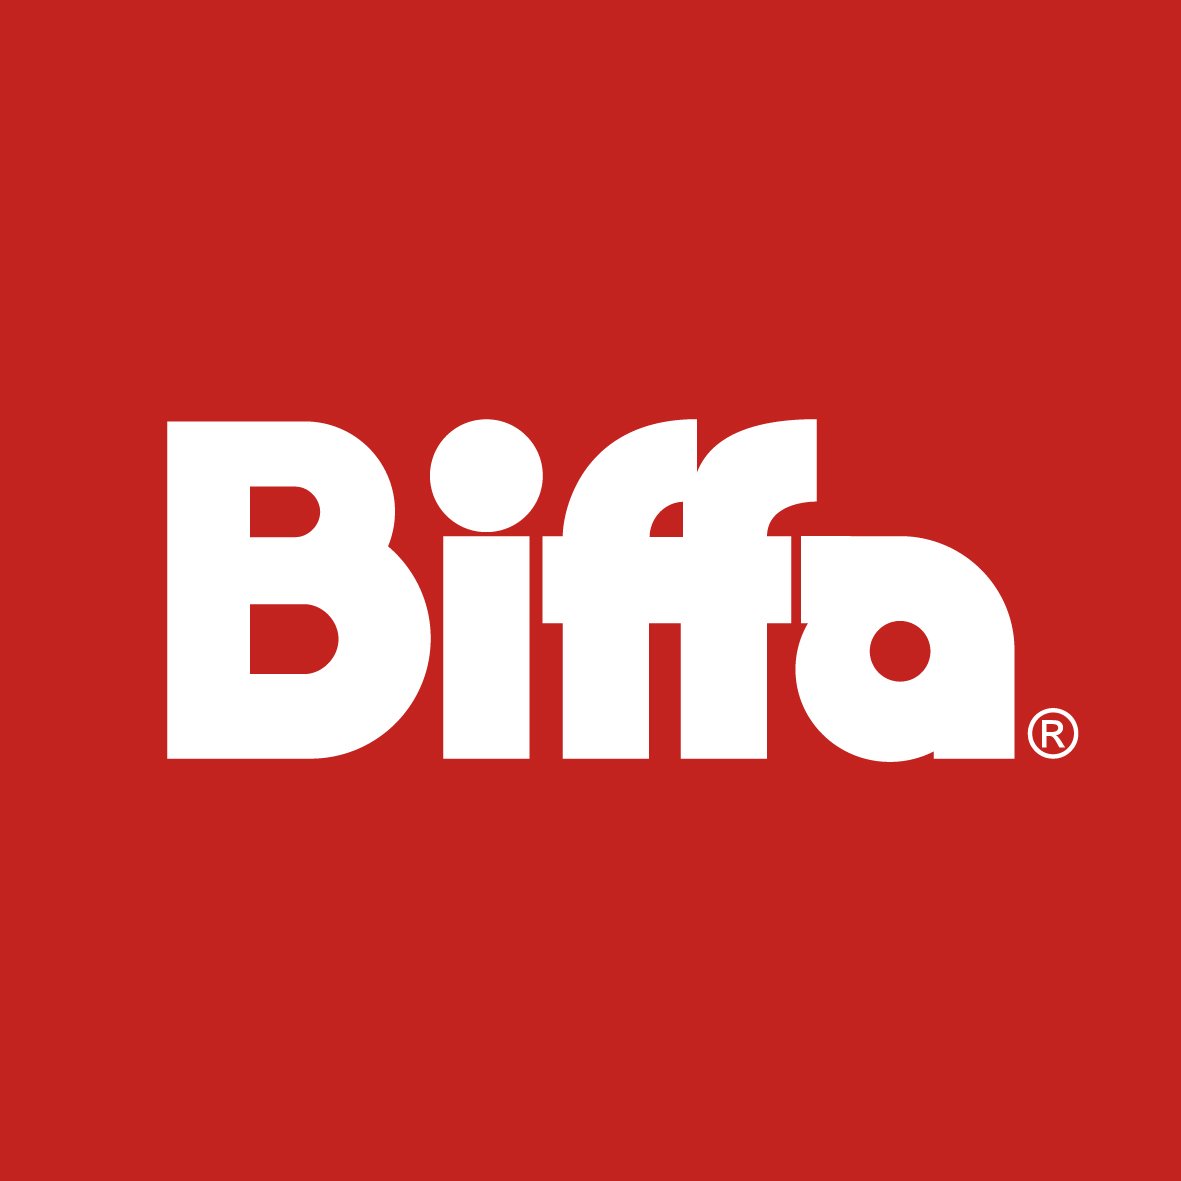 Biffa logo - www.simplers.co.uk